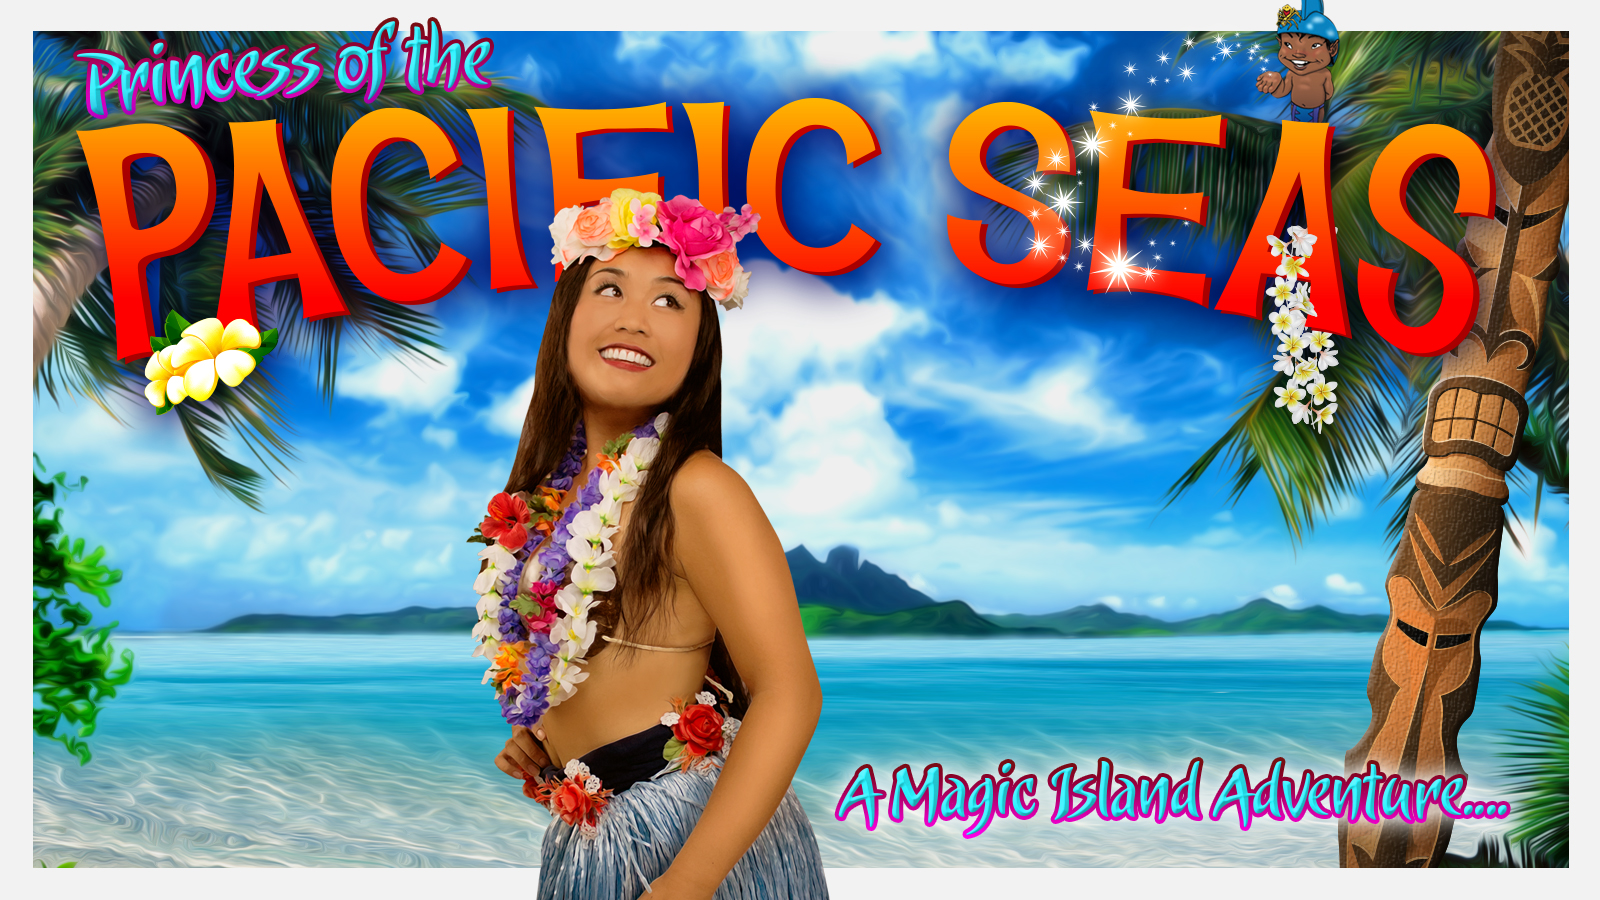 Princess of the Pacific Seas: A Magic Island Adventure